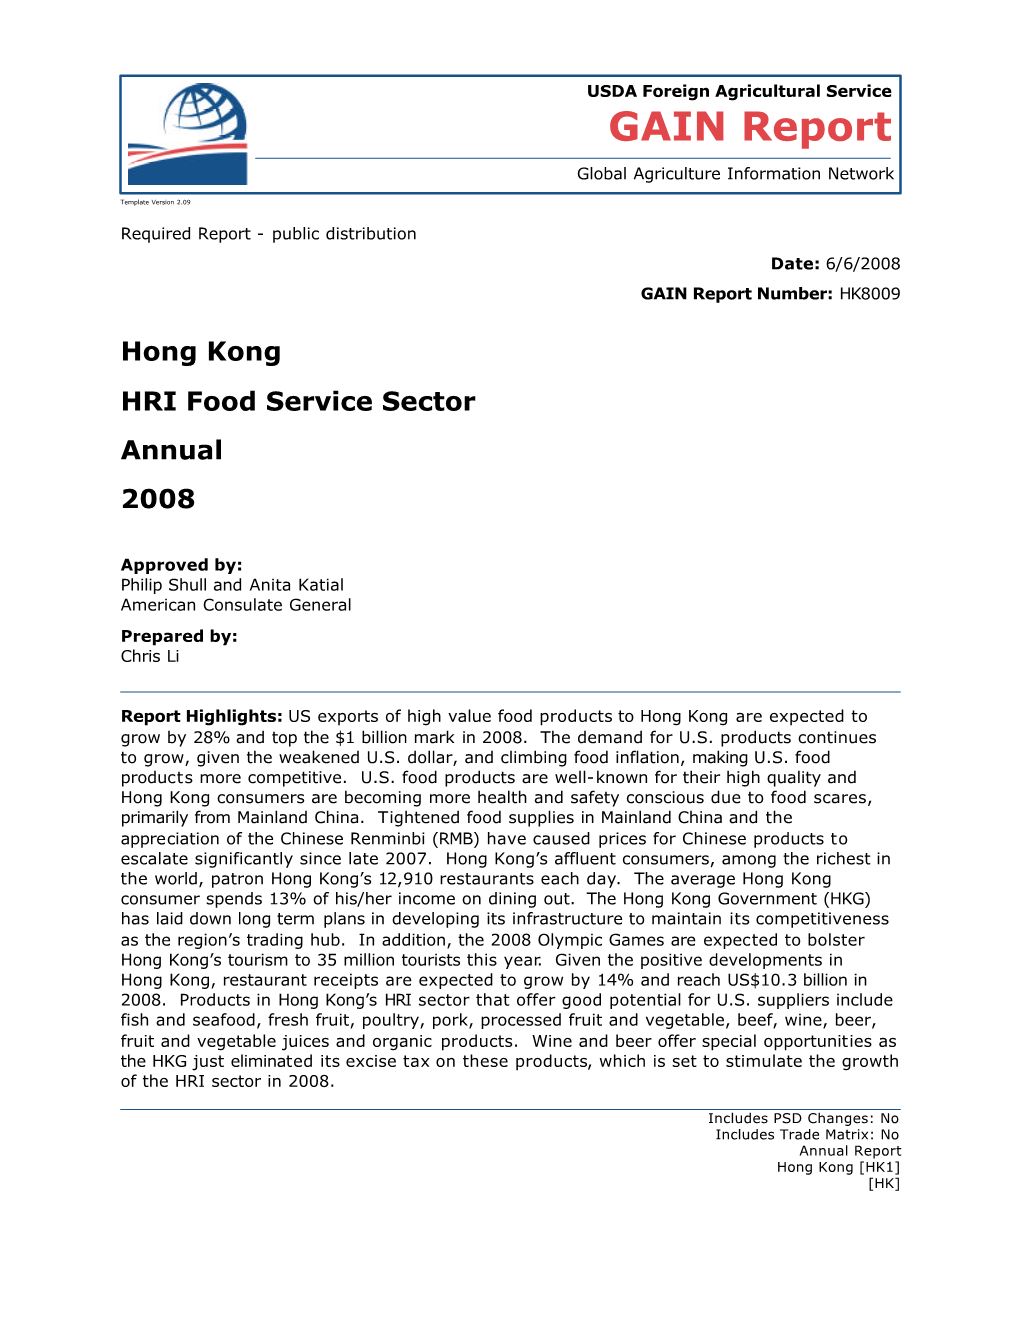 Hong Kong HRI Food Service Sector Annual 2008